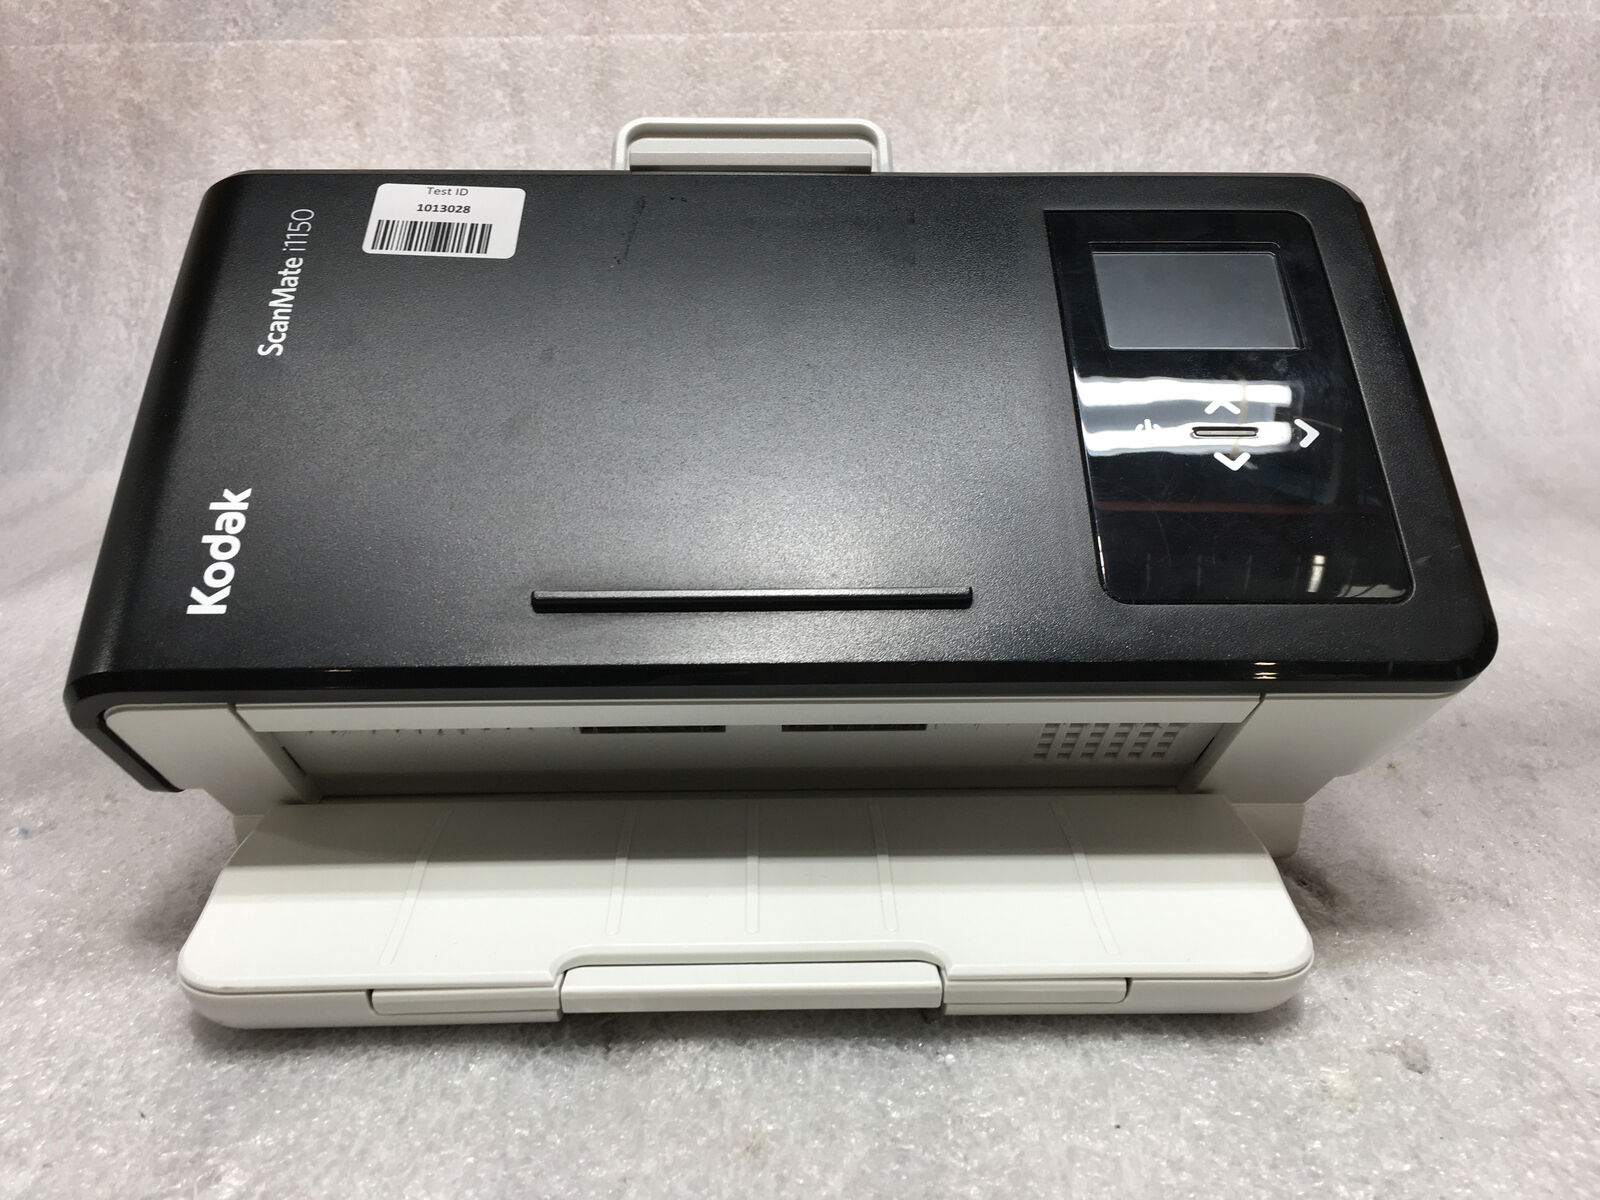 Kodak ScanMate i1150 Color Duplex Document Scanner Tested No AC/USB